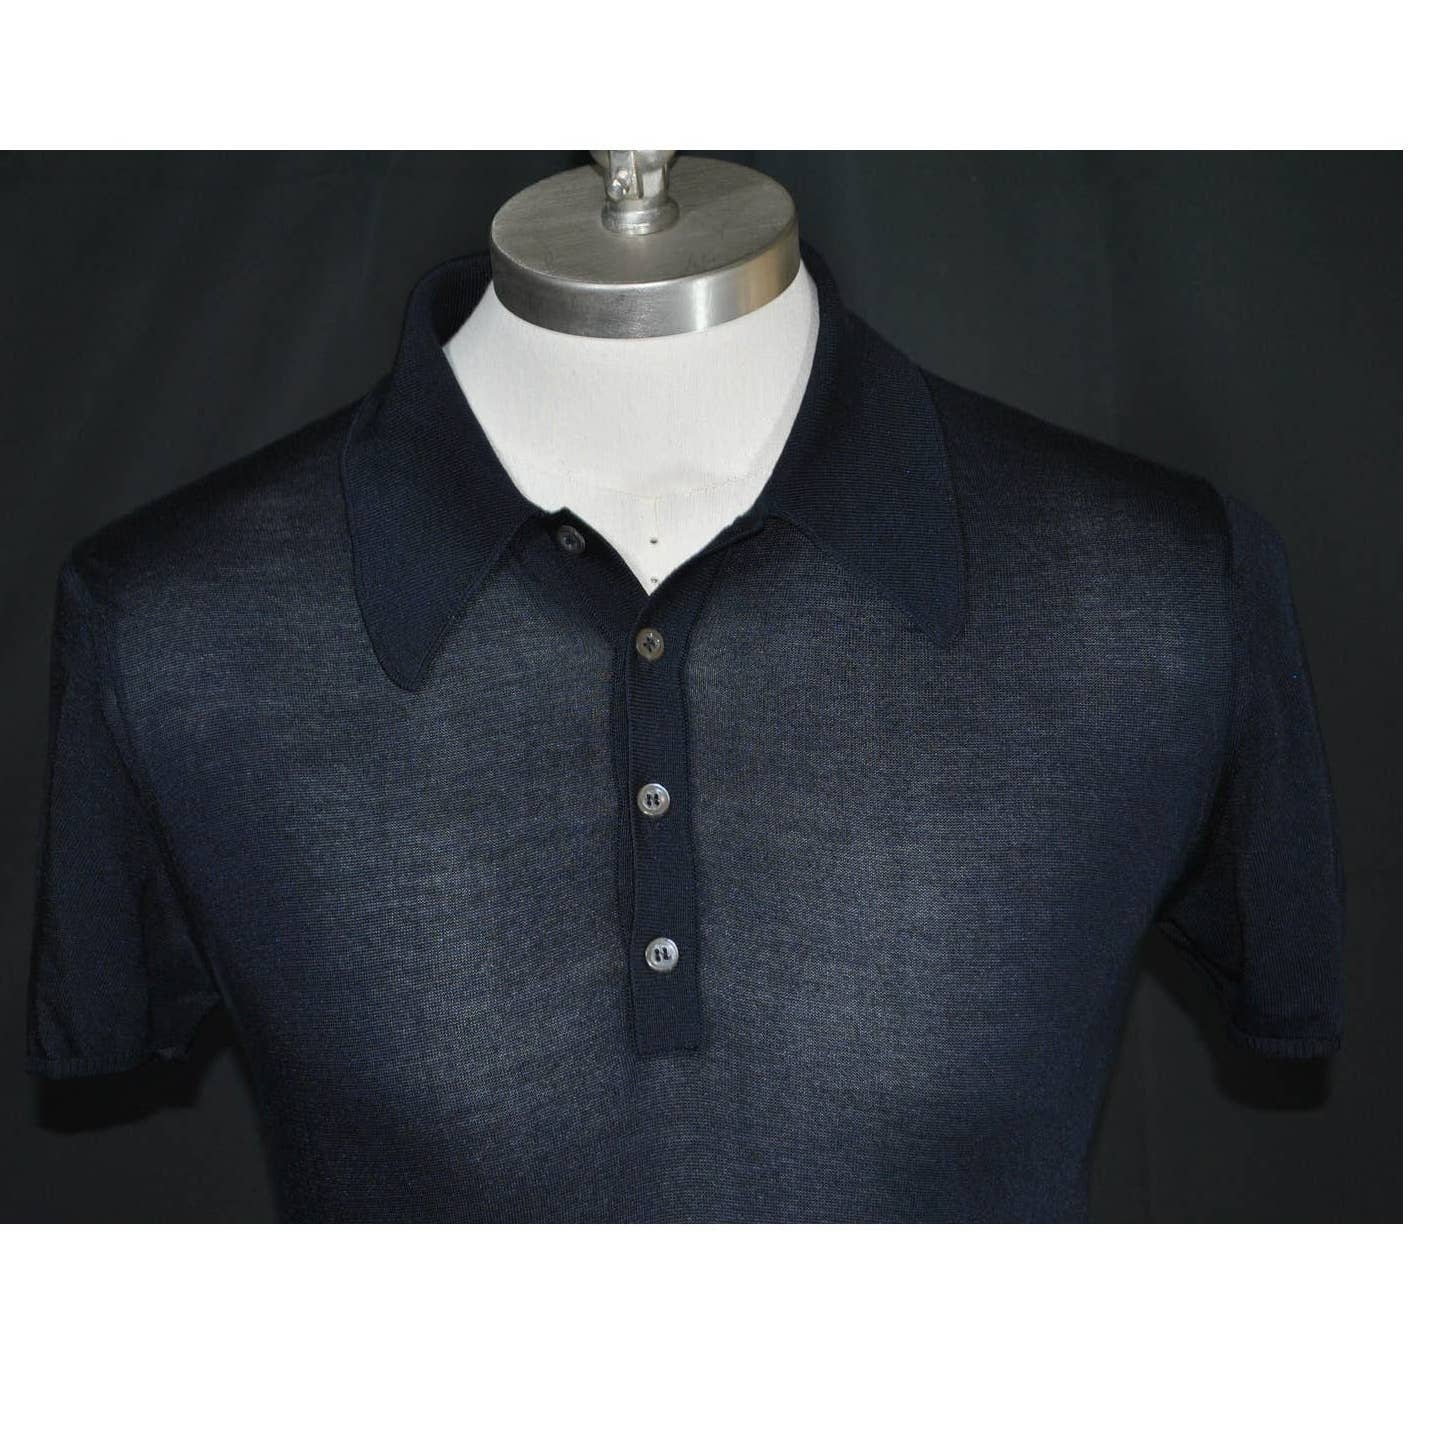 Emanuel Ungaro Handmade Silk Navy Polo Shirt - 52 (XL)